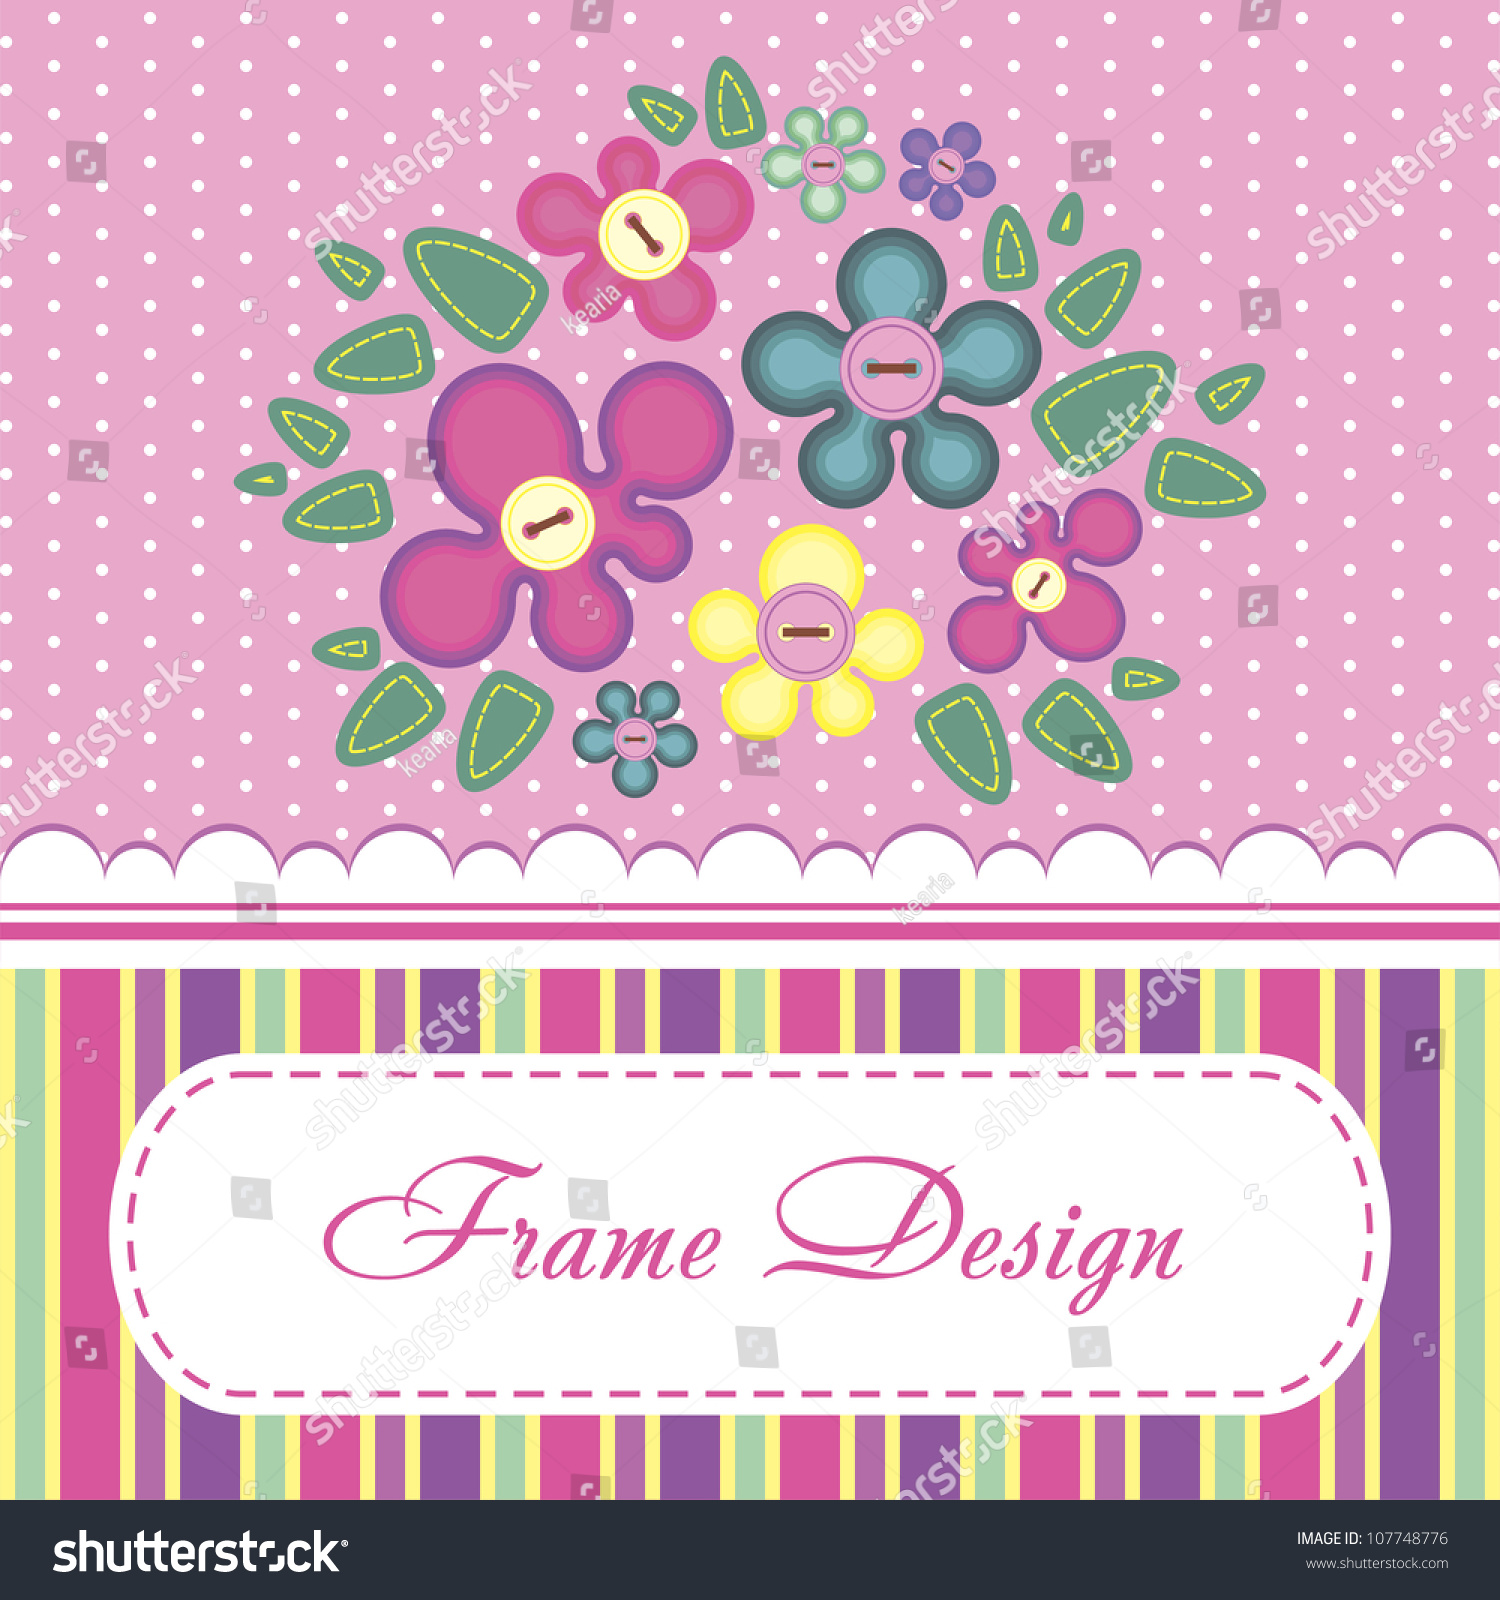 Cute Scrapbook Frame Design. Vector Illustration - 107748776 : Shutterstock